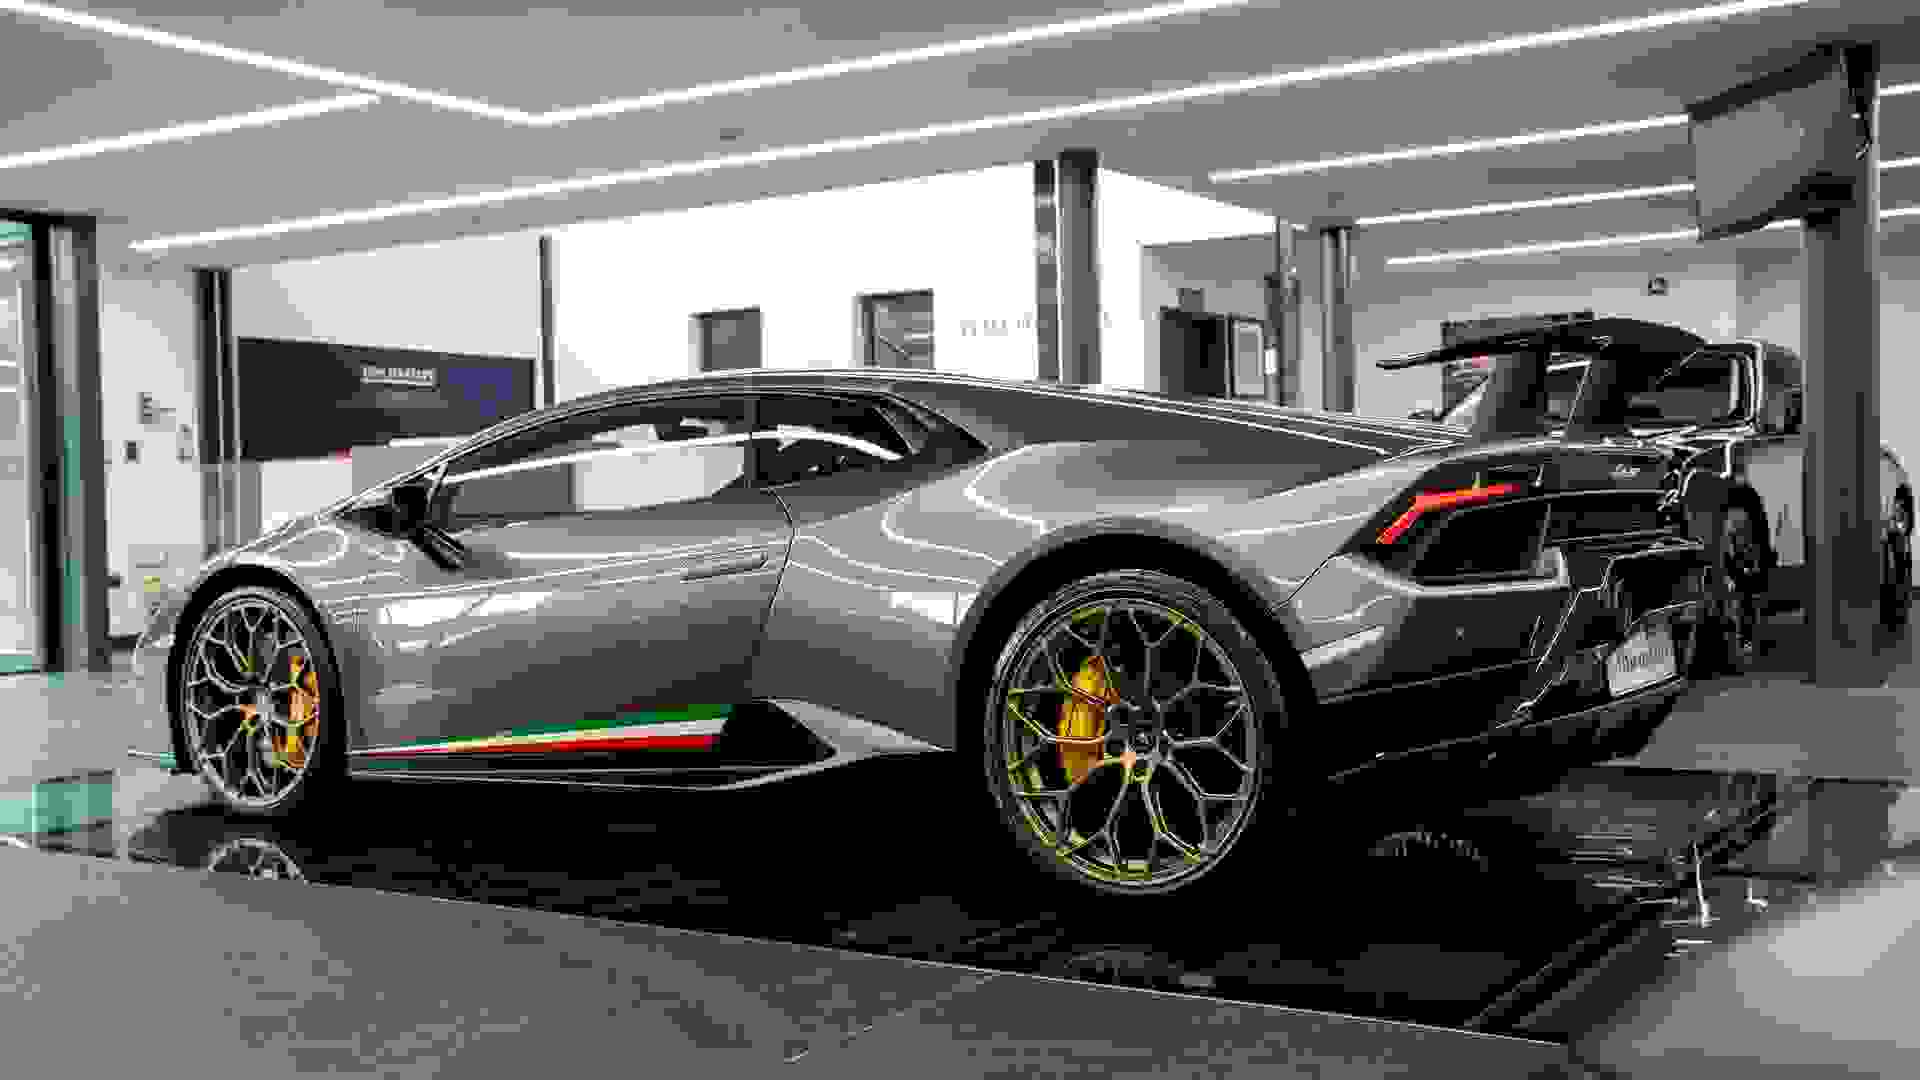 Lamborghini Huracan Photo db980985-ea17-4079-85f3-05af249f9ade.jpg